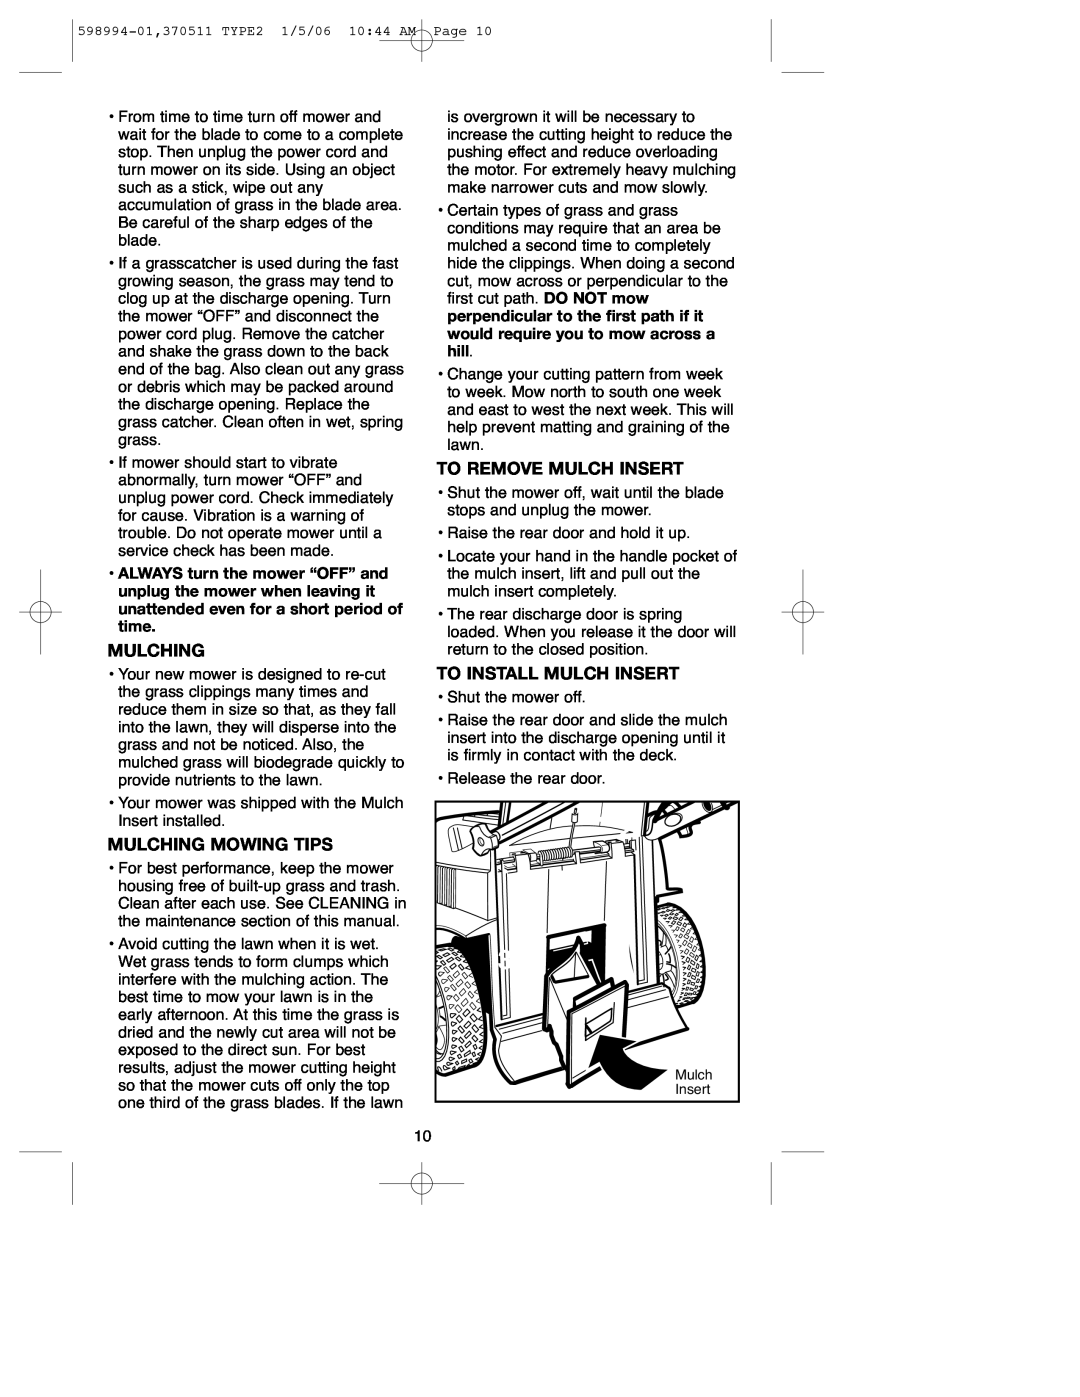 DeWalt 900.370511 instruction manual Mulching Mowing Tips, To Remove Mulch Insert, To Install Mulch Insert 